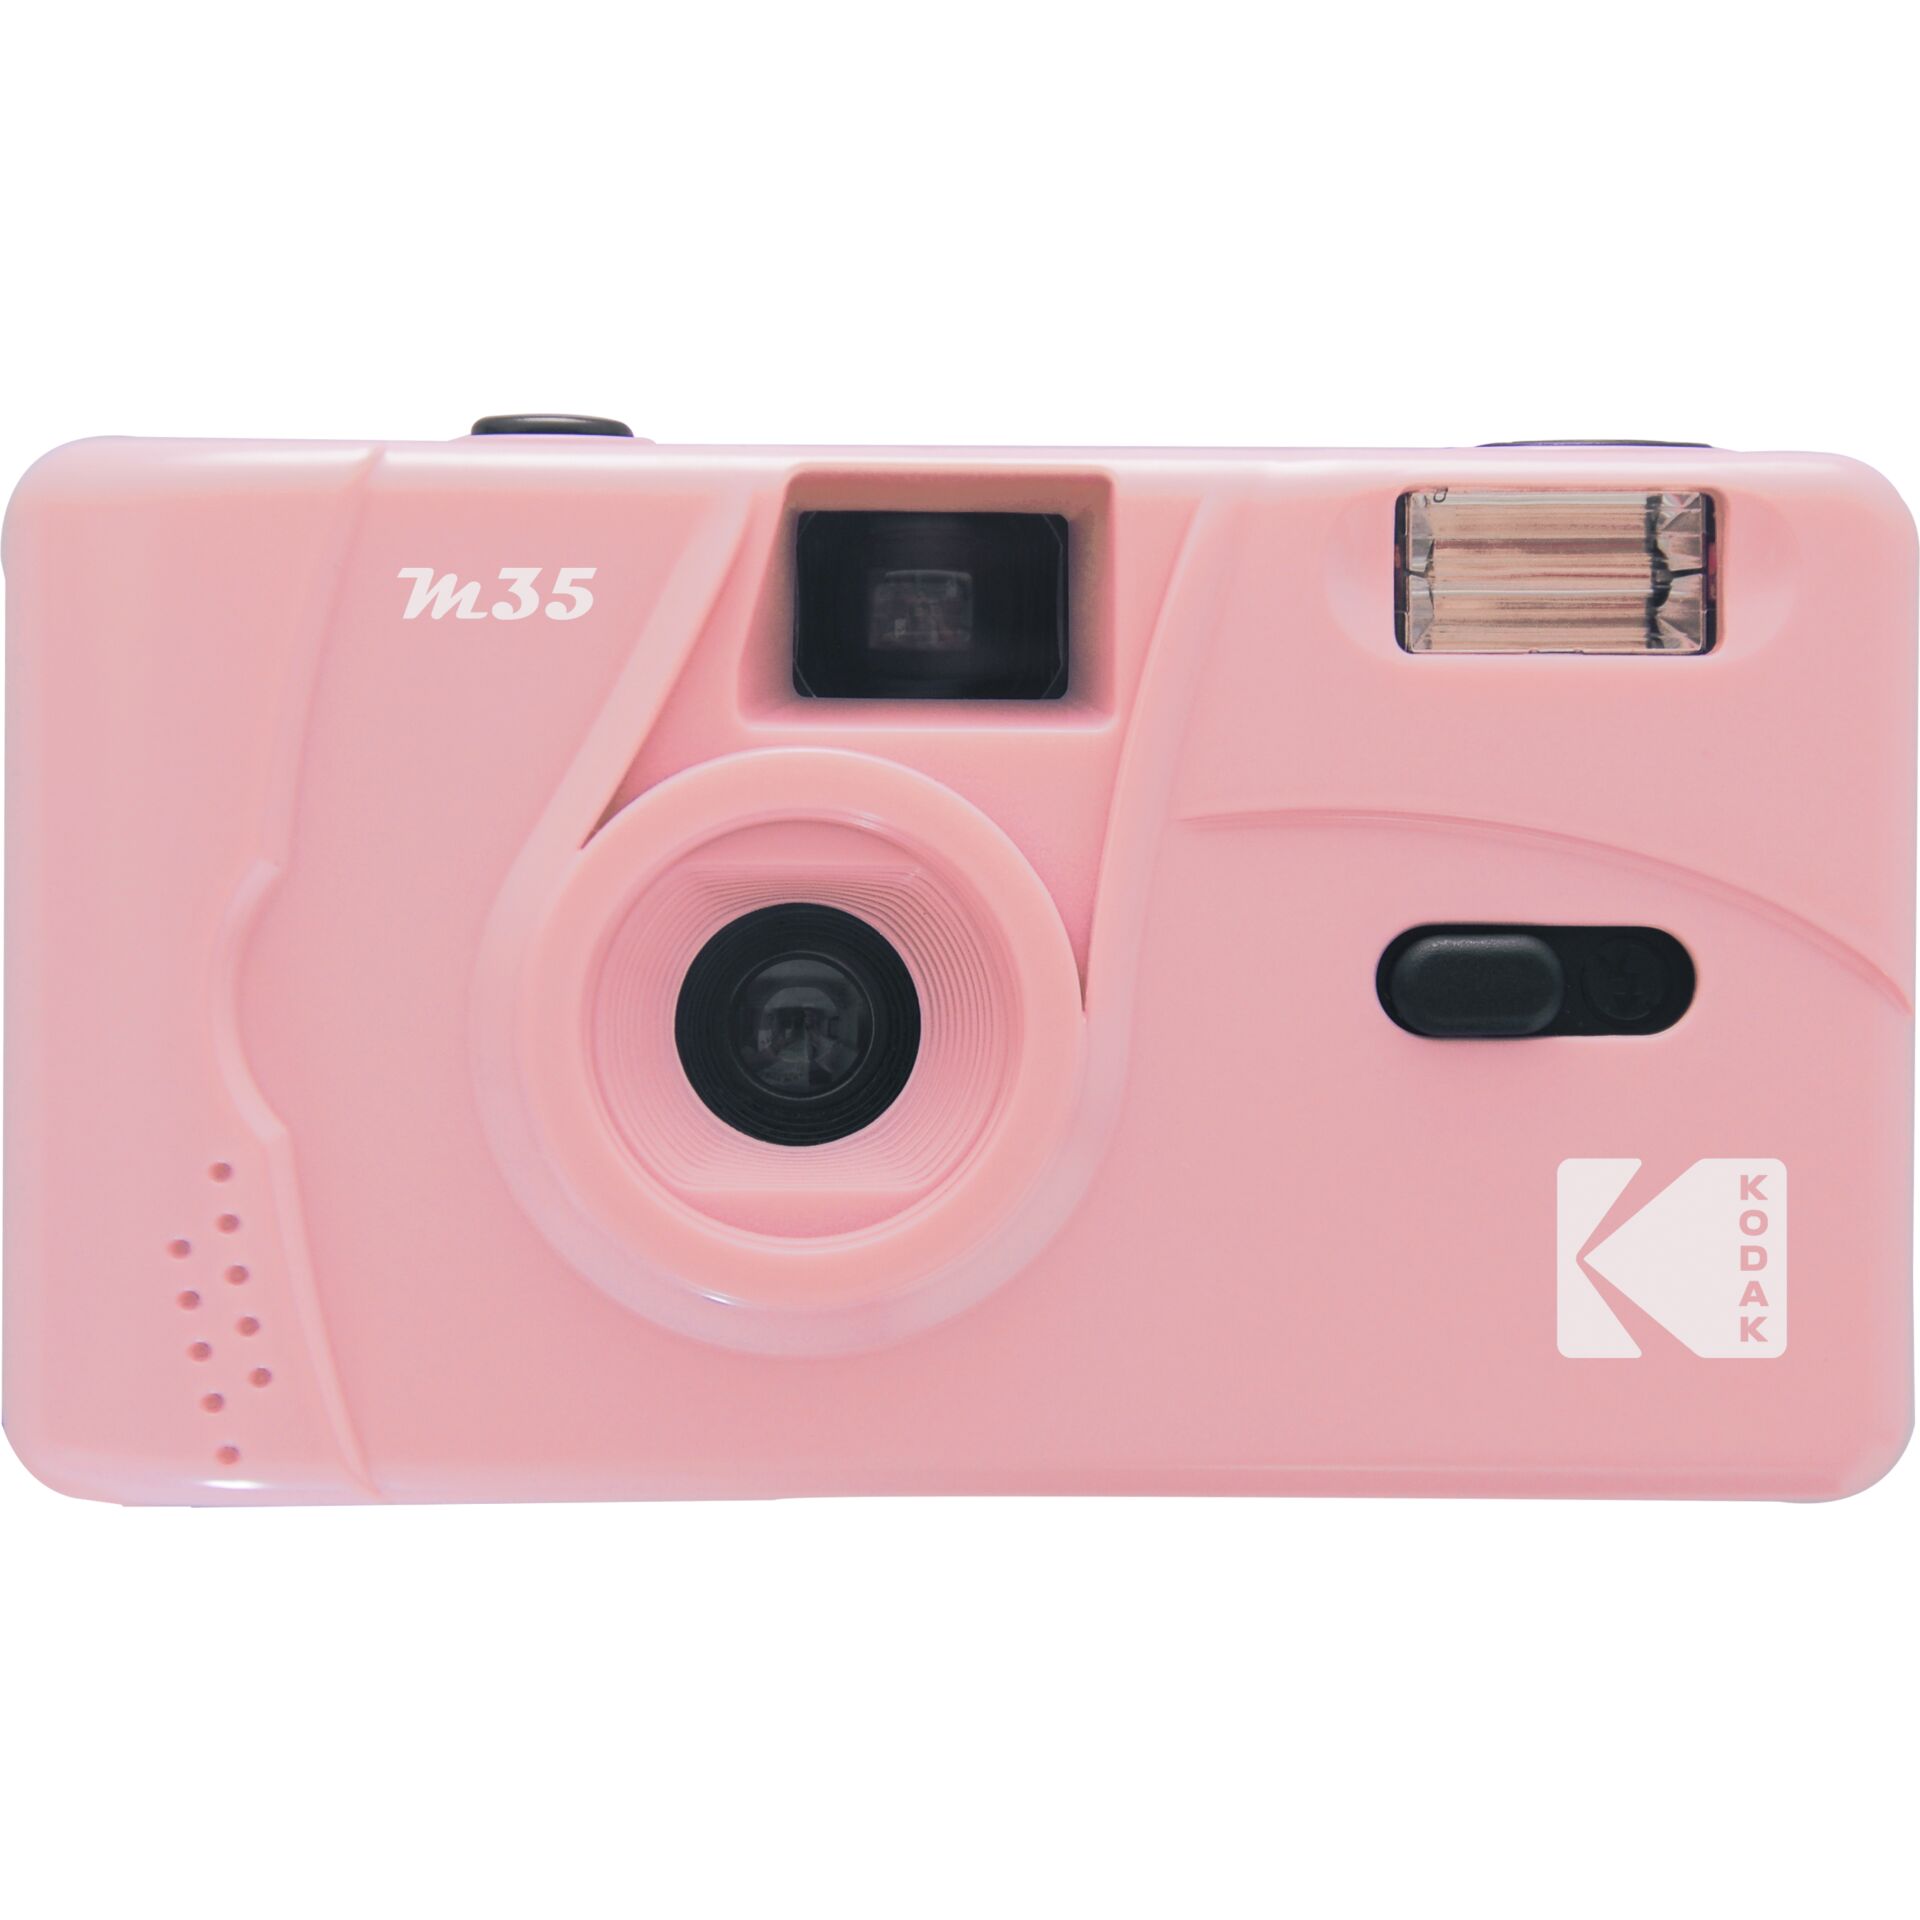 Kodak Film Camera m35 with Flash candy pink